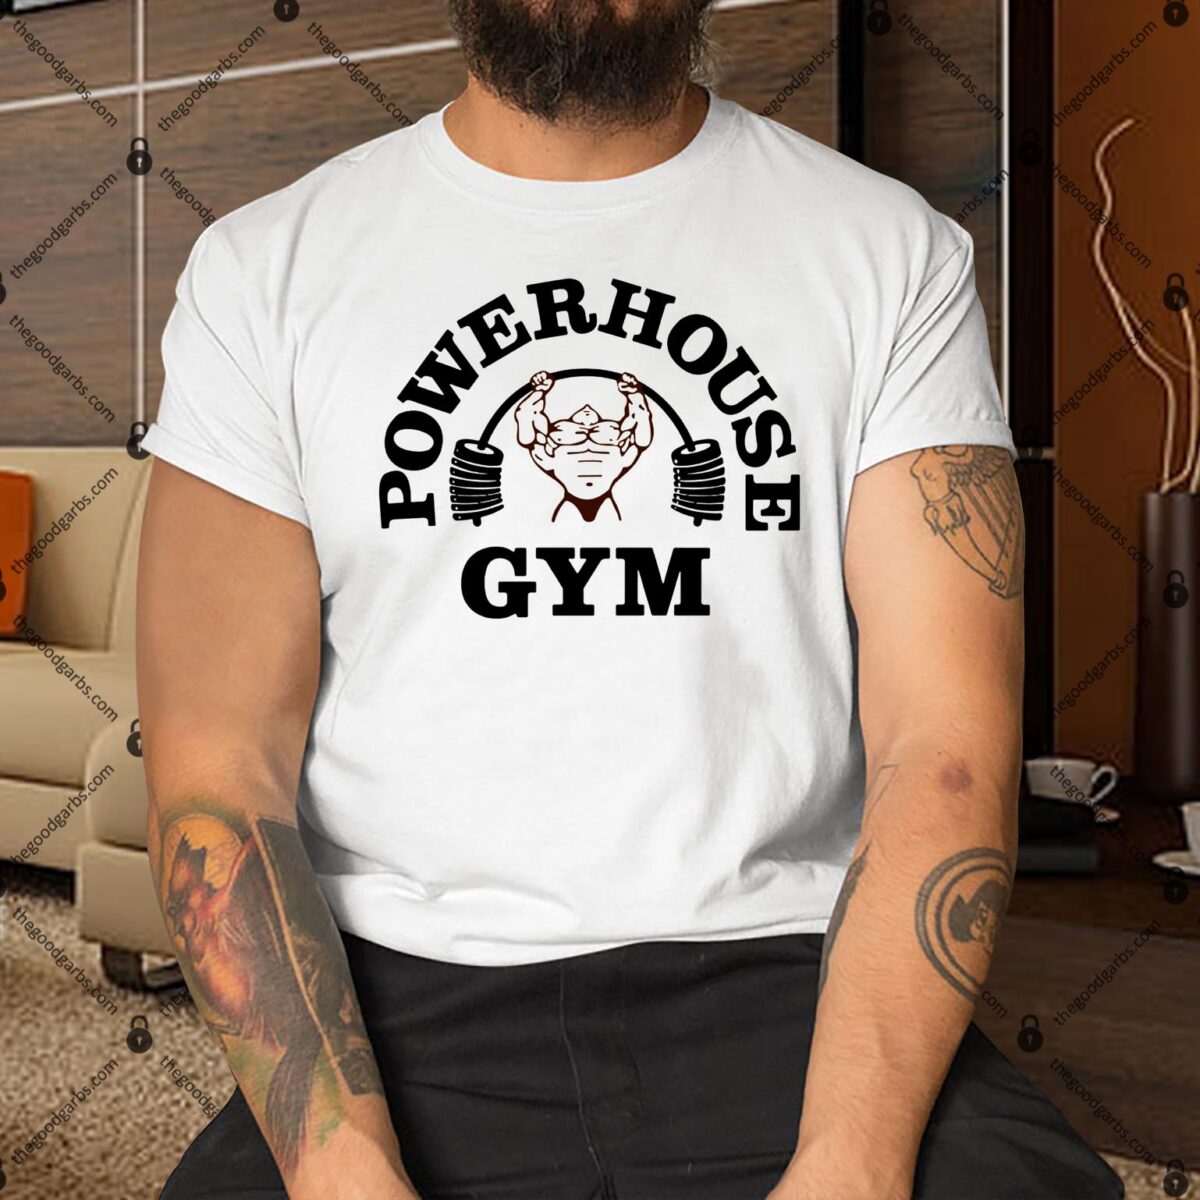 Powerhouse Gym Shirt